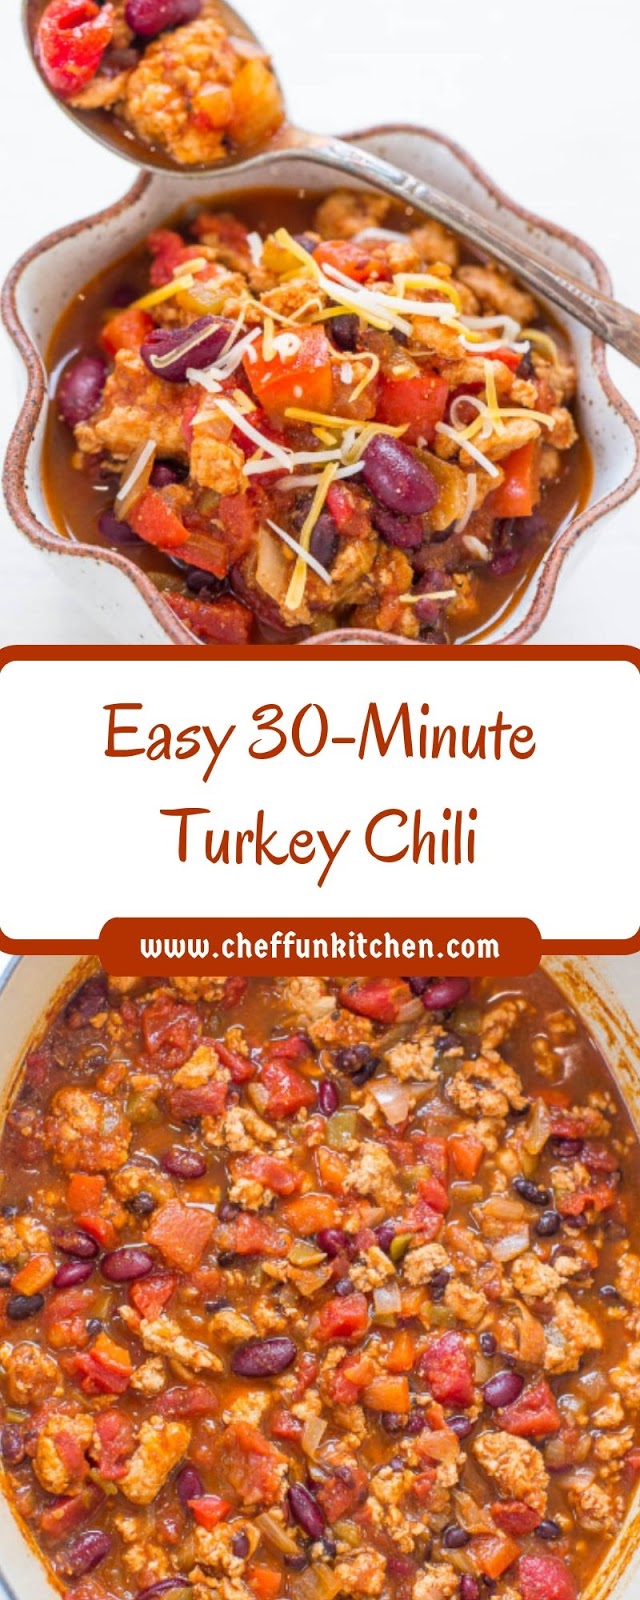 Easy 30-Minute Turkey Chili